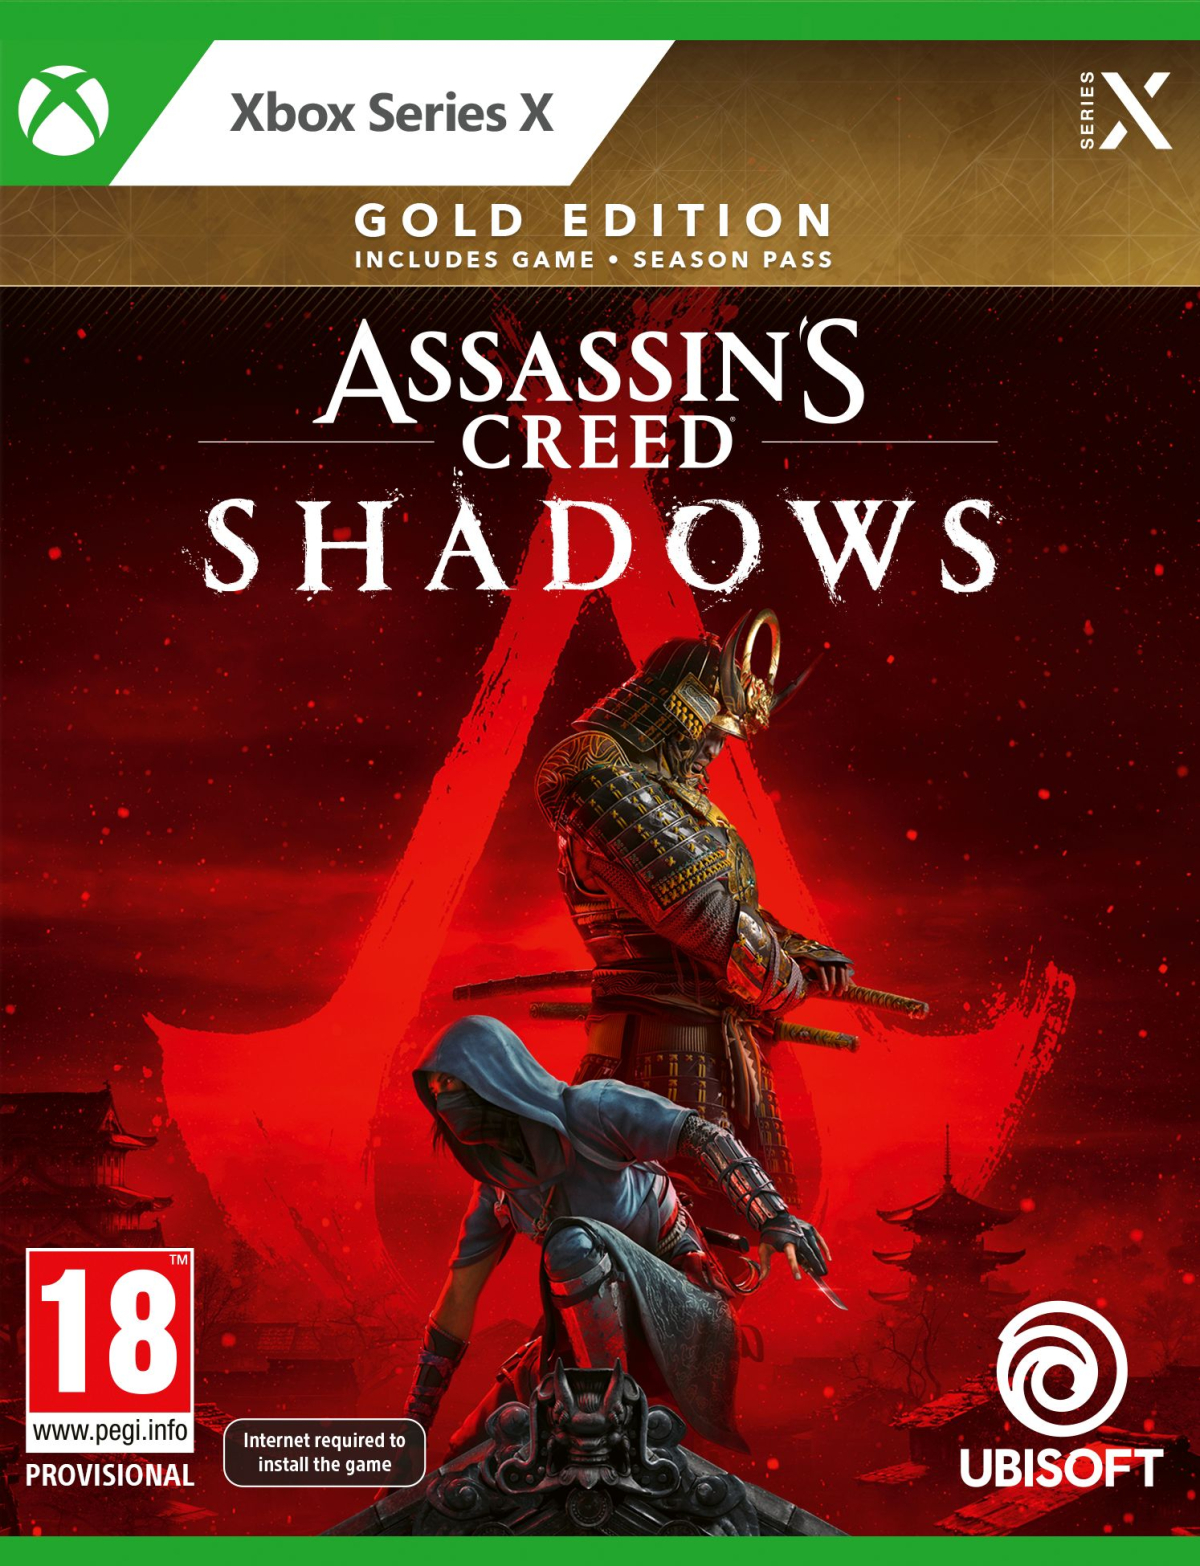 XBOXSeriesX Assassin´s Creed Shadows Gold Edition + Pre-Order Bonus